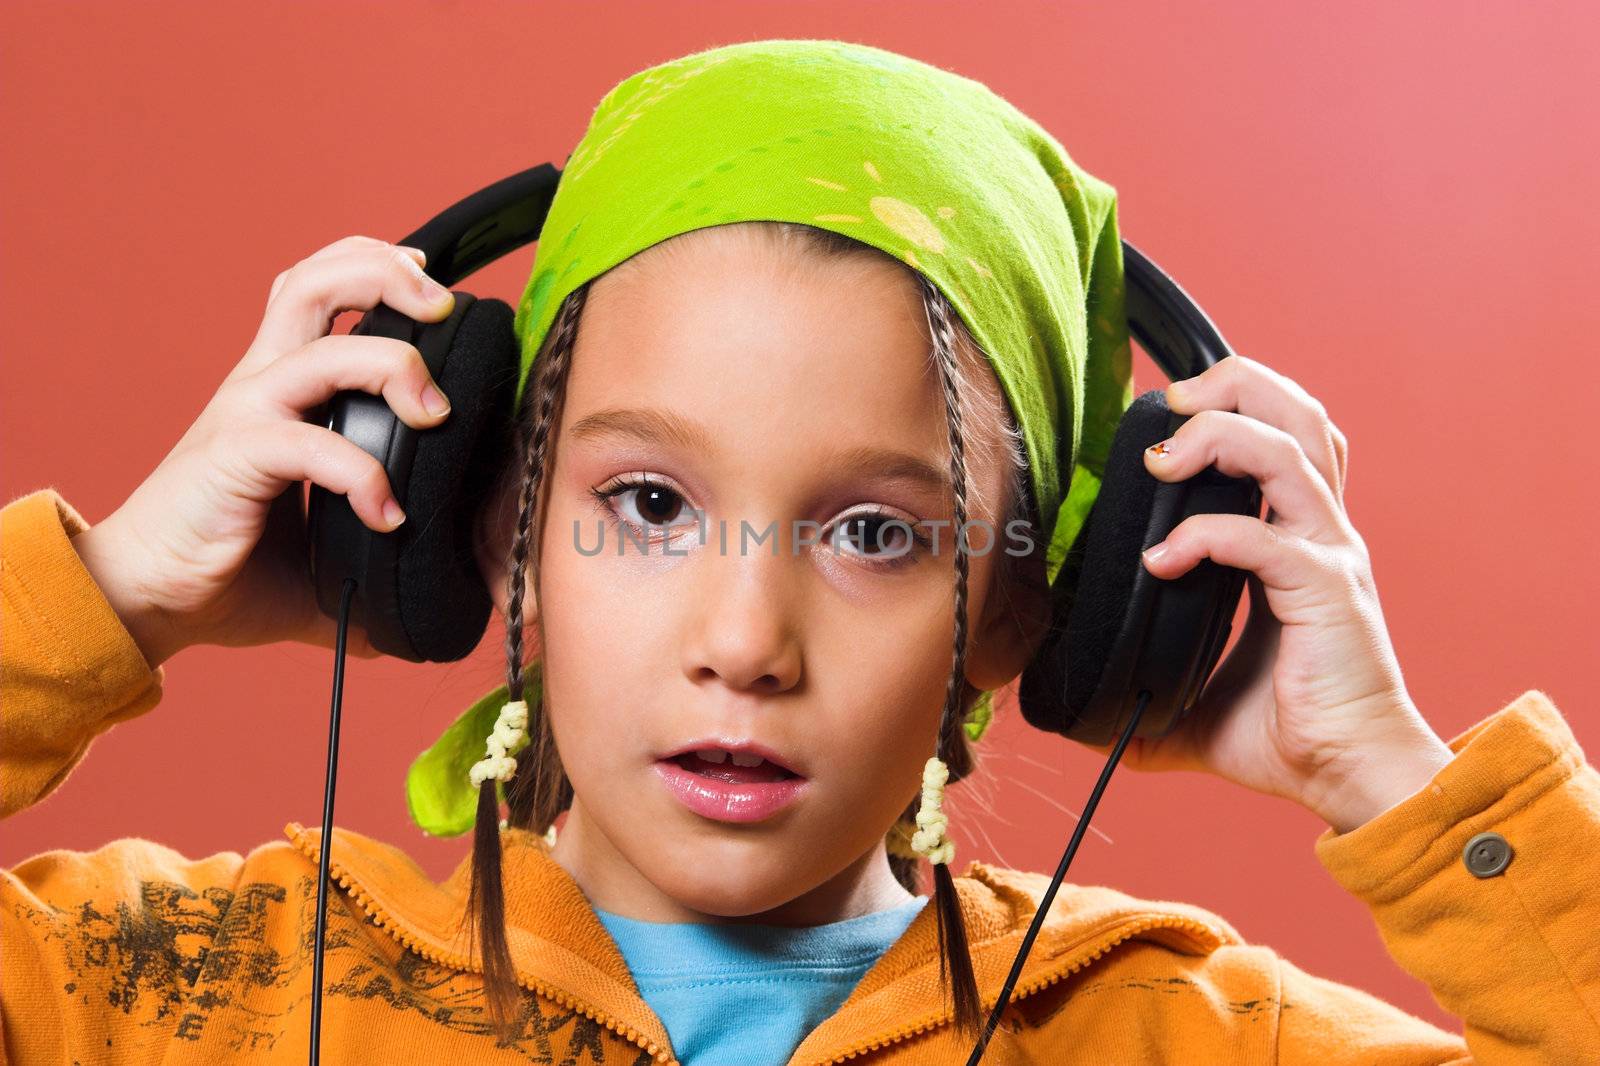 little pretty child listening music in headphones